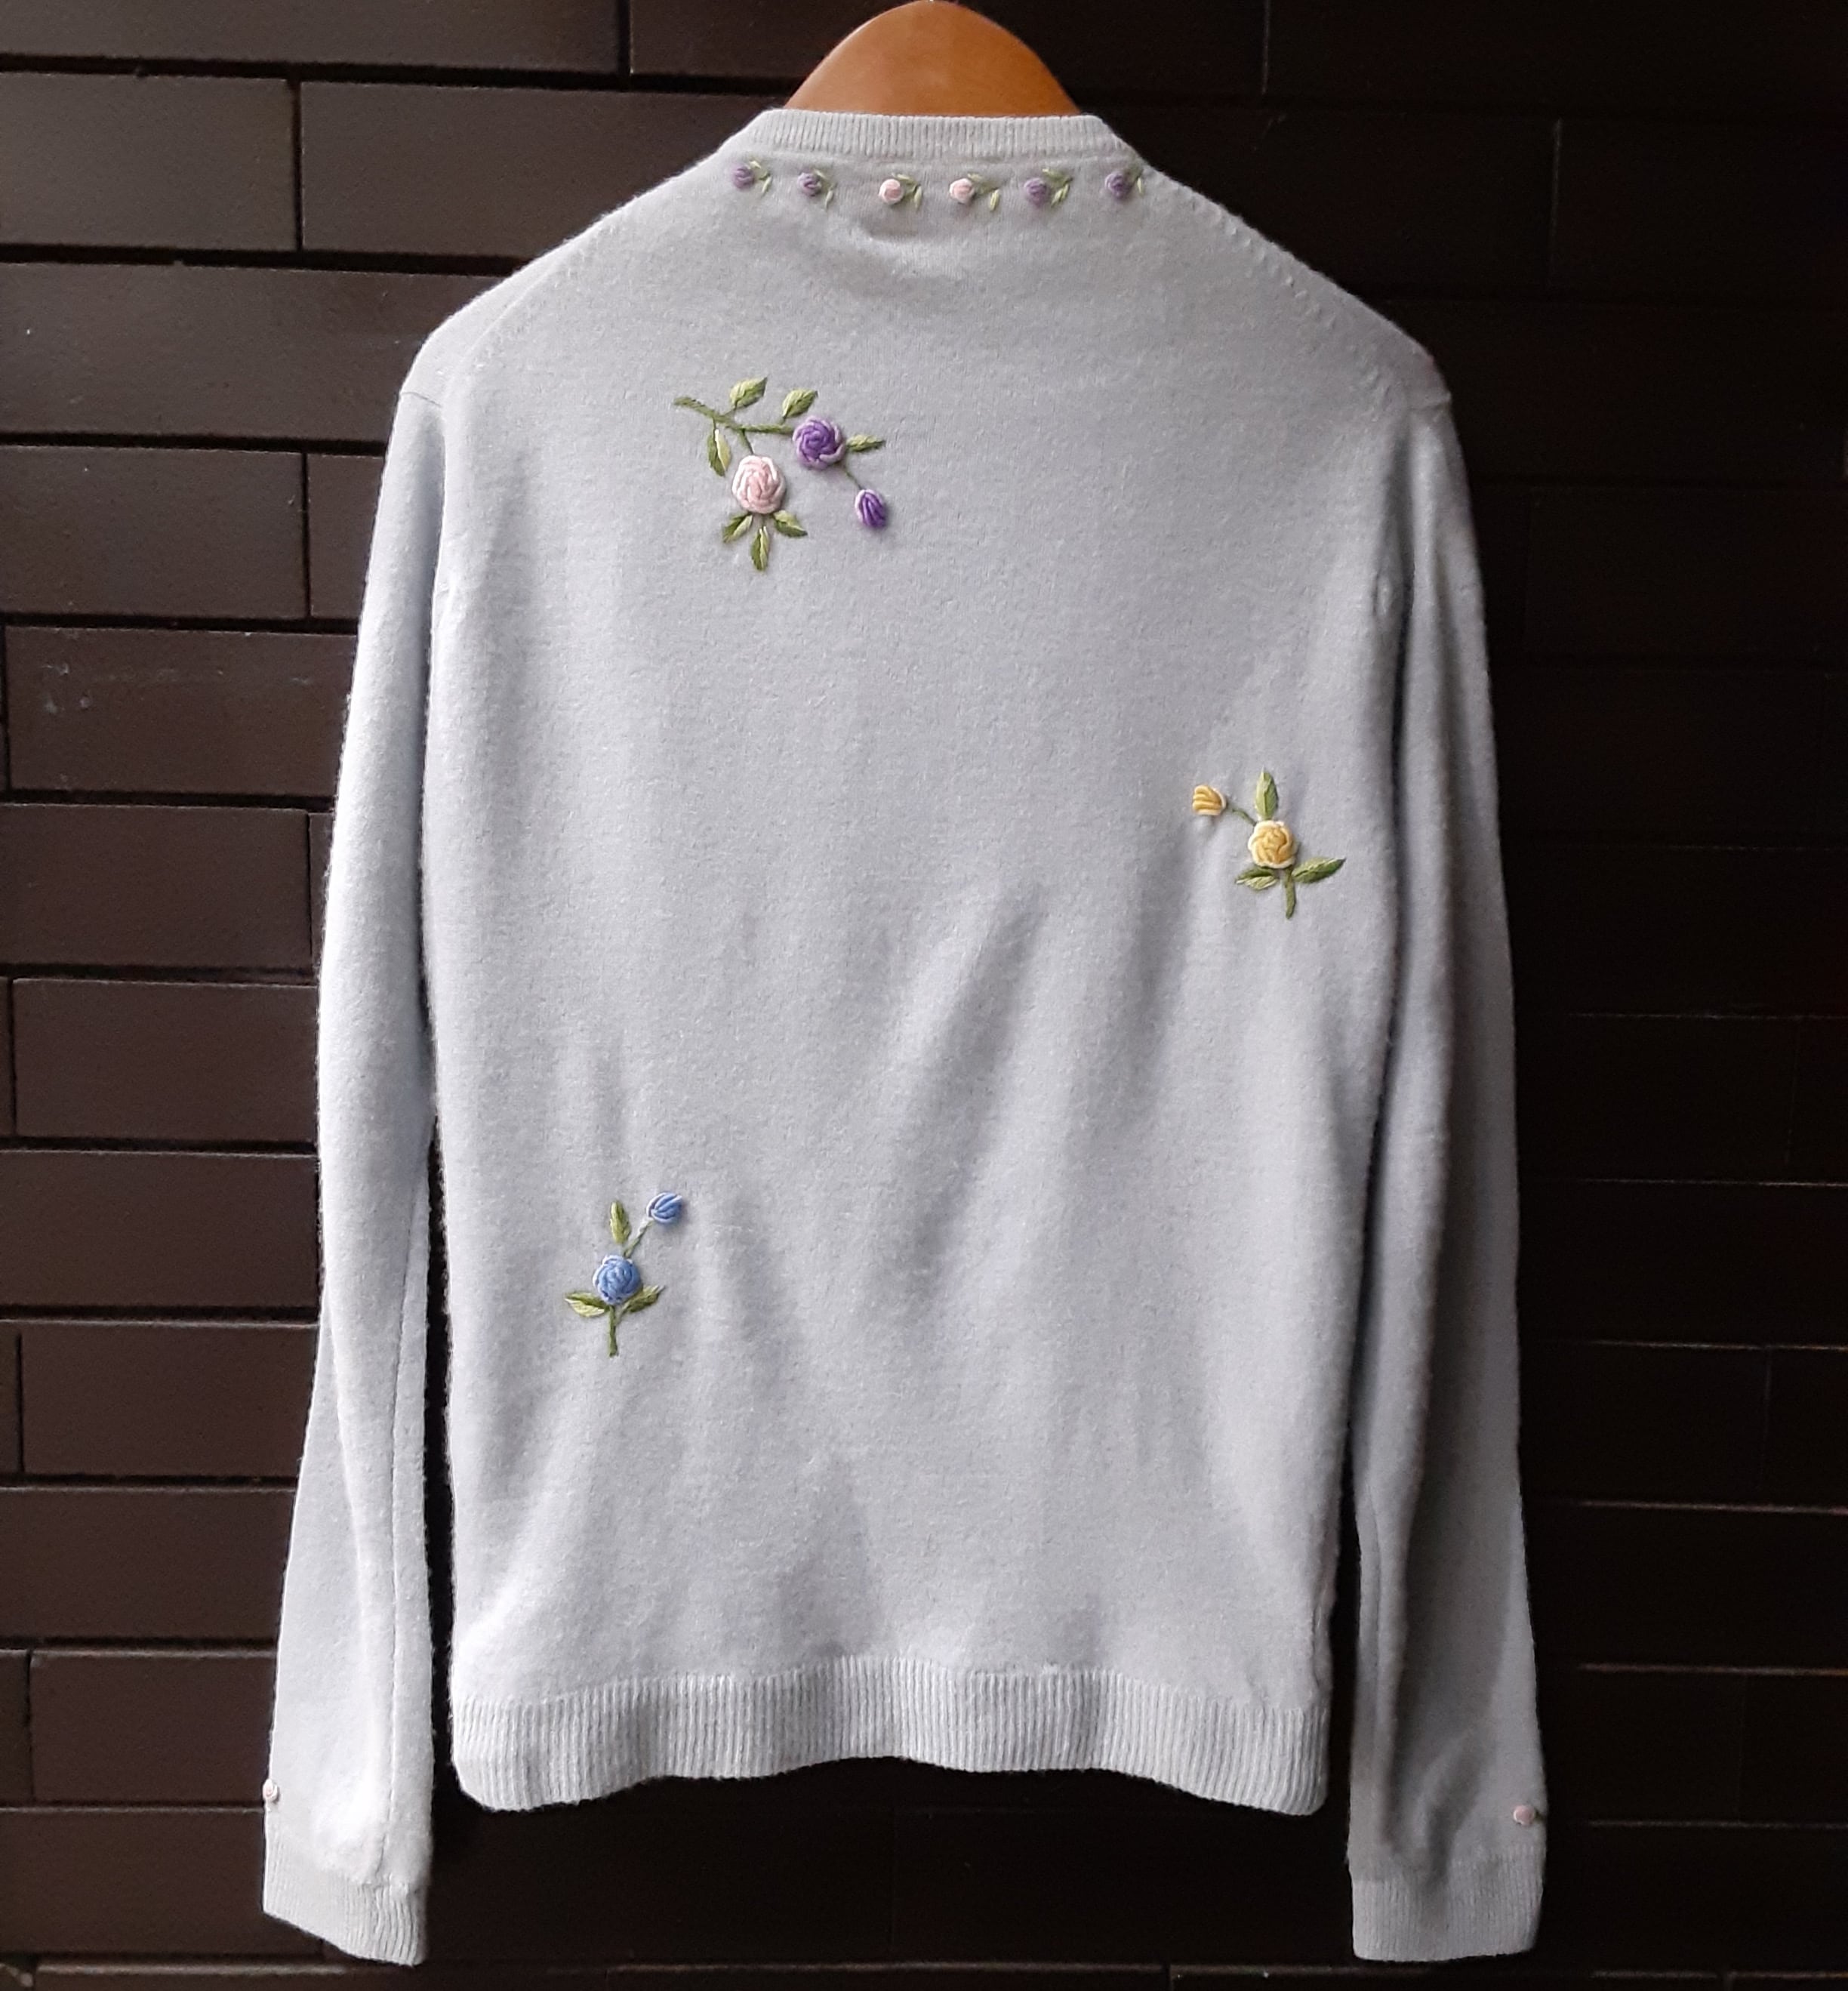 50~60's flower embroidery cardigan 50~60年代花立体刺繍カーディガン ...